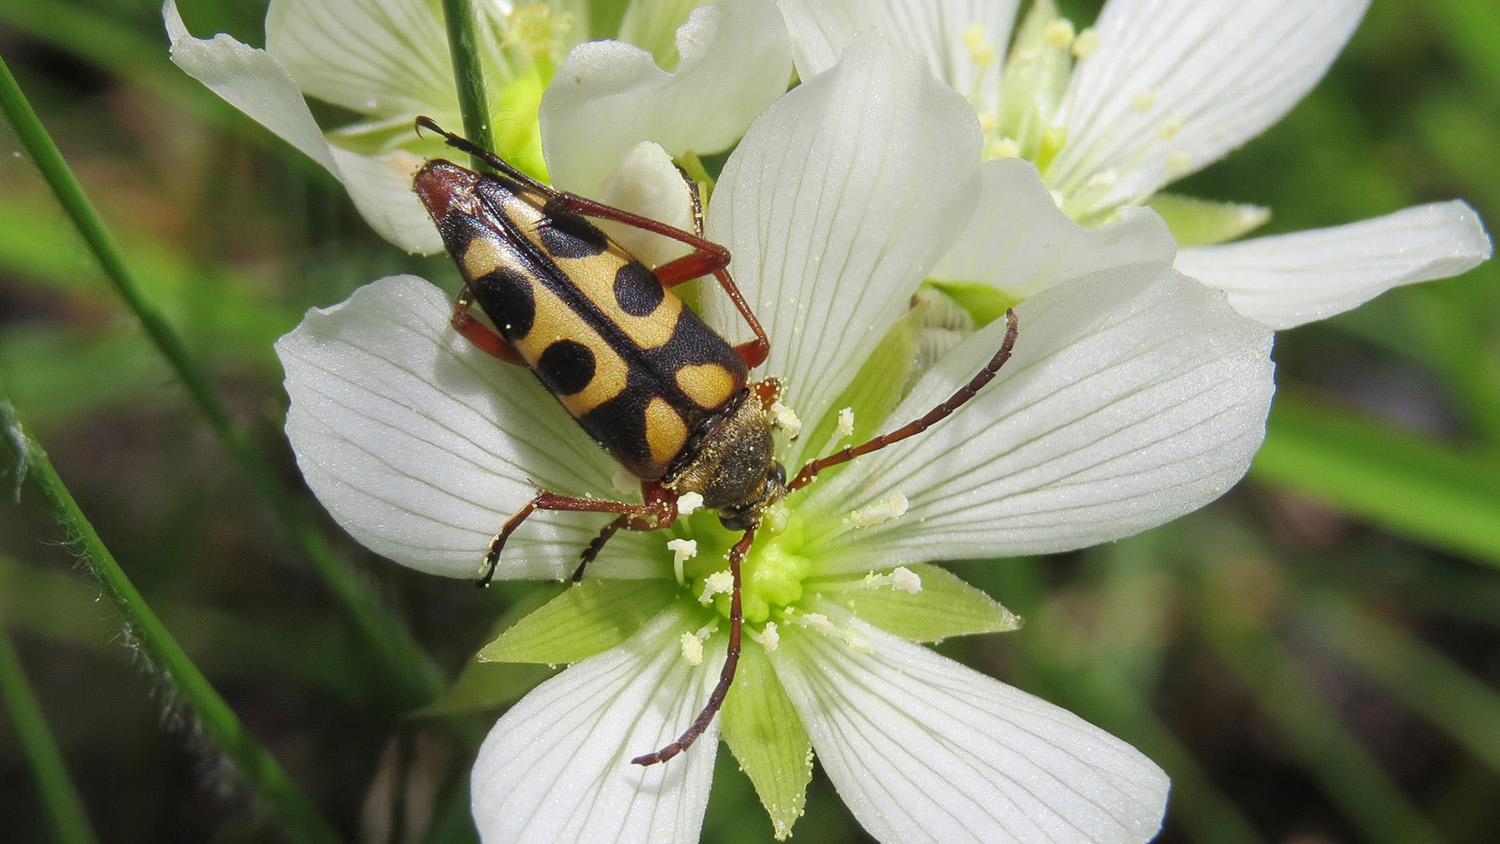 A large longhorn beetle on a Venus flytrap blossom.